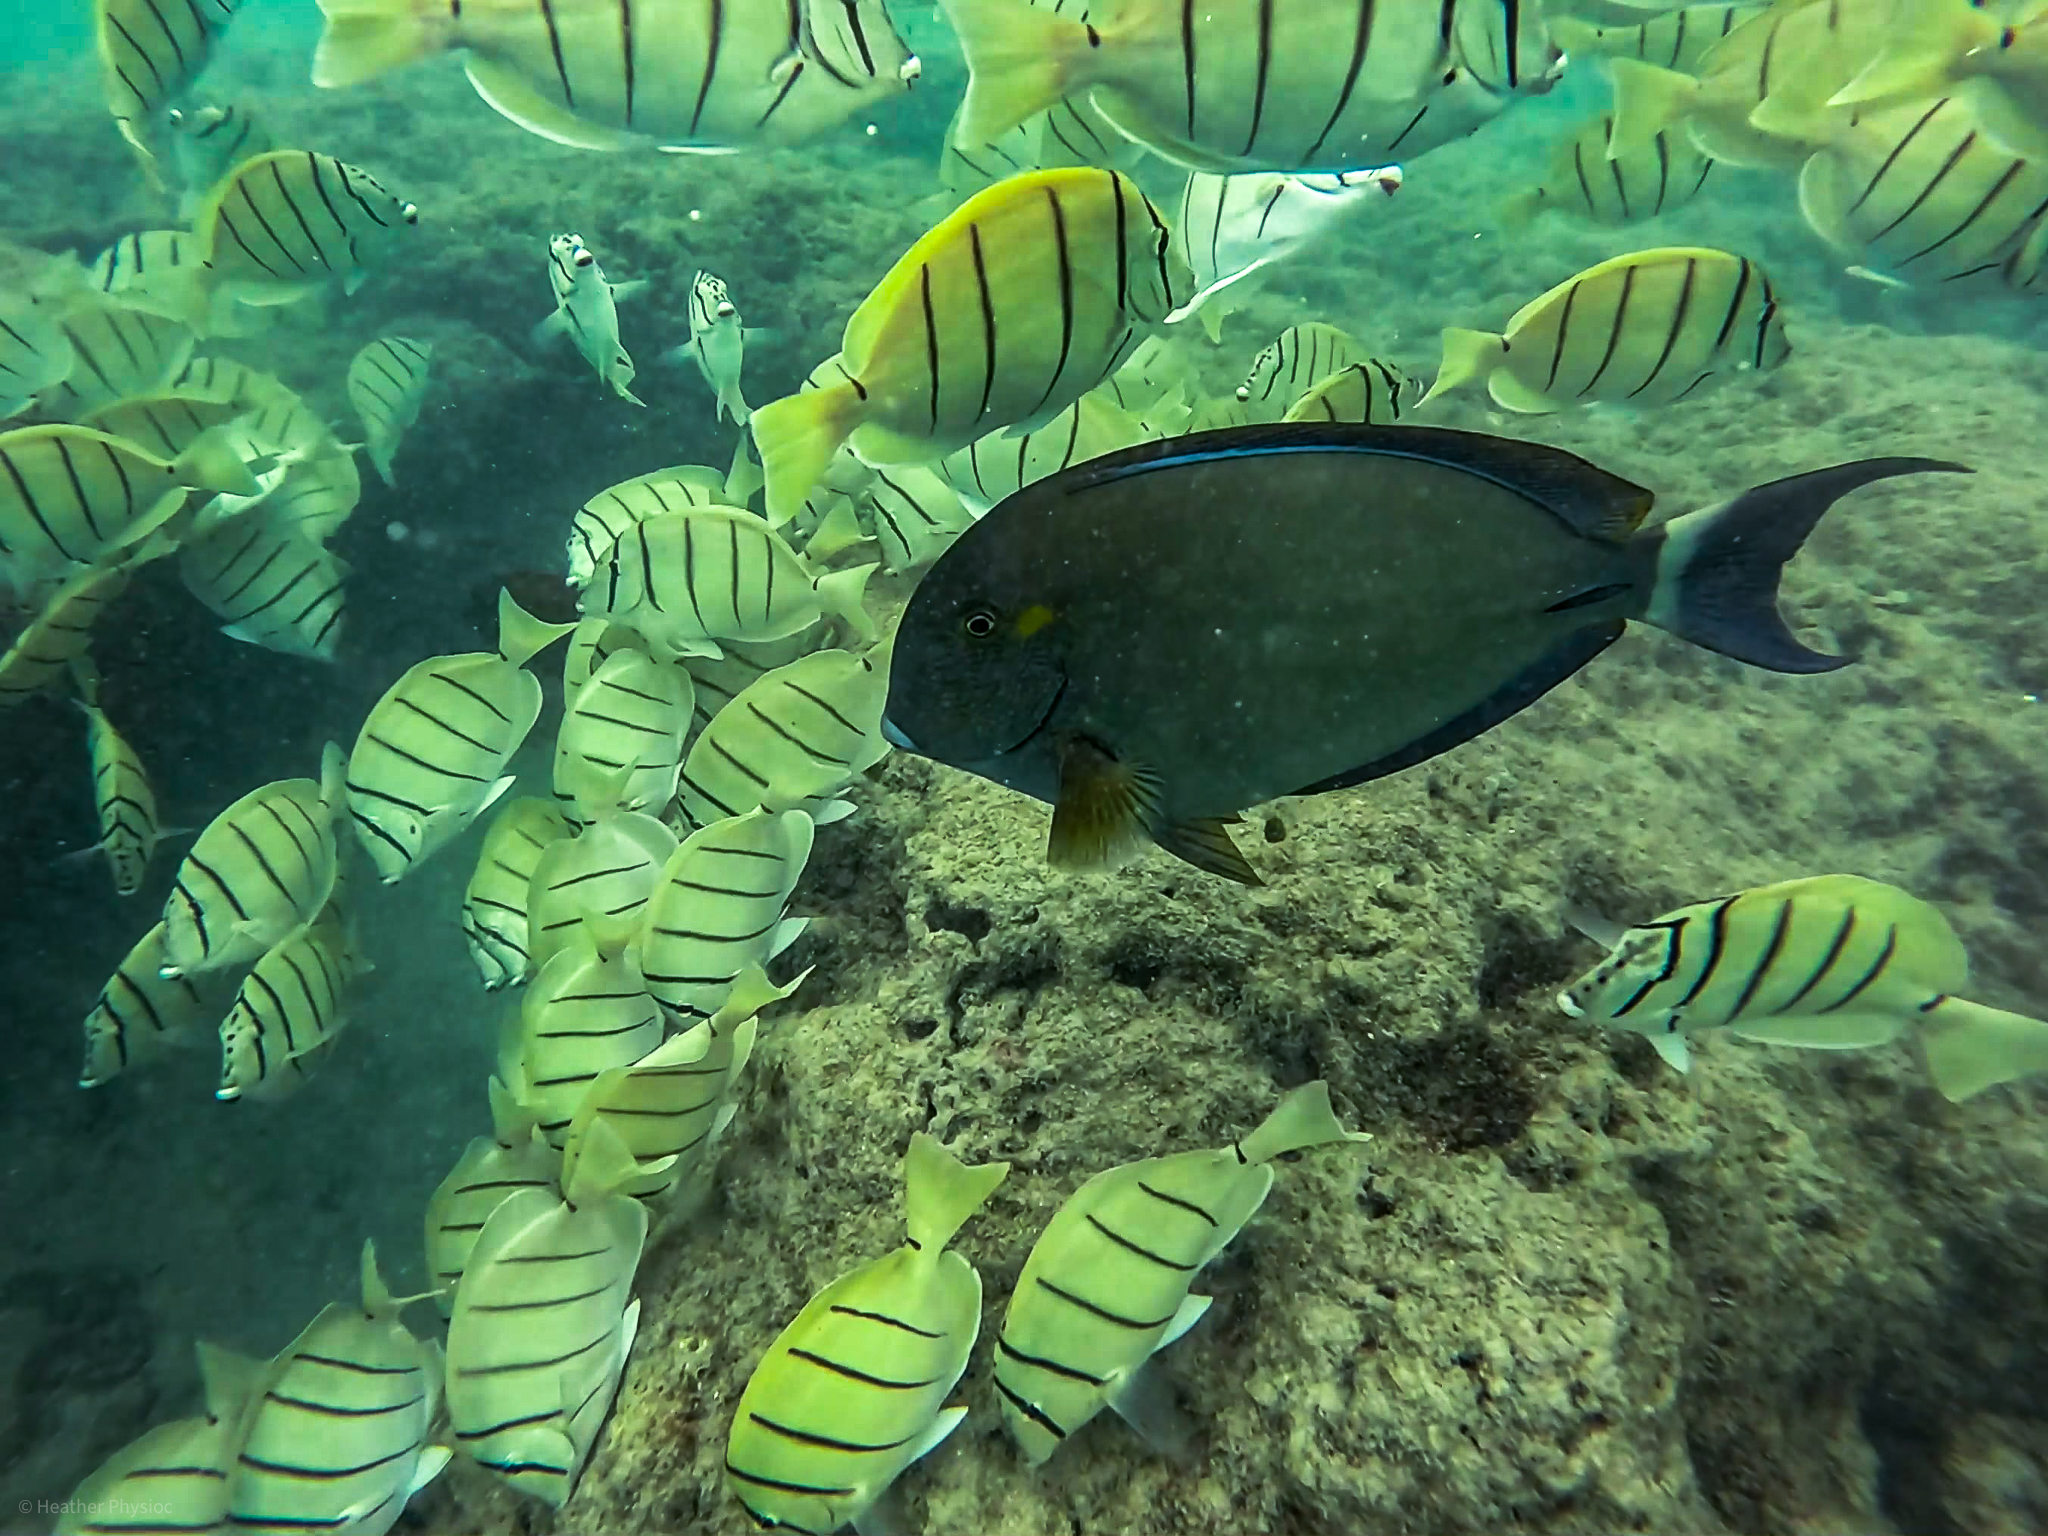 Acanthurus blochii swims amid a school of Convict tang fish in Hanauma Bay in Hawaii